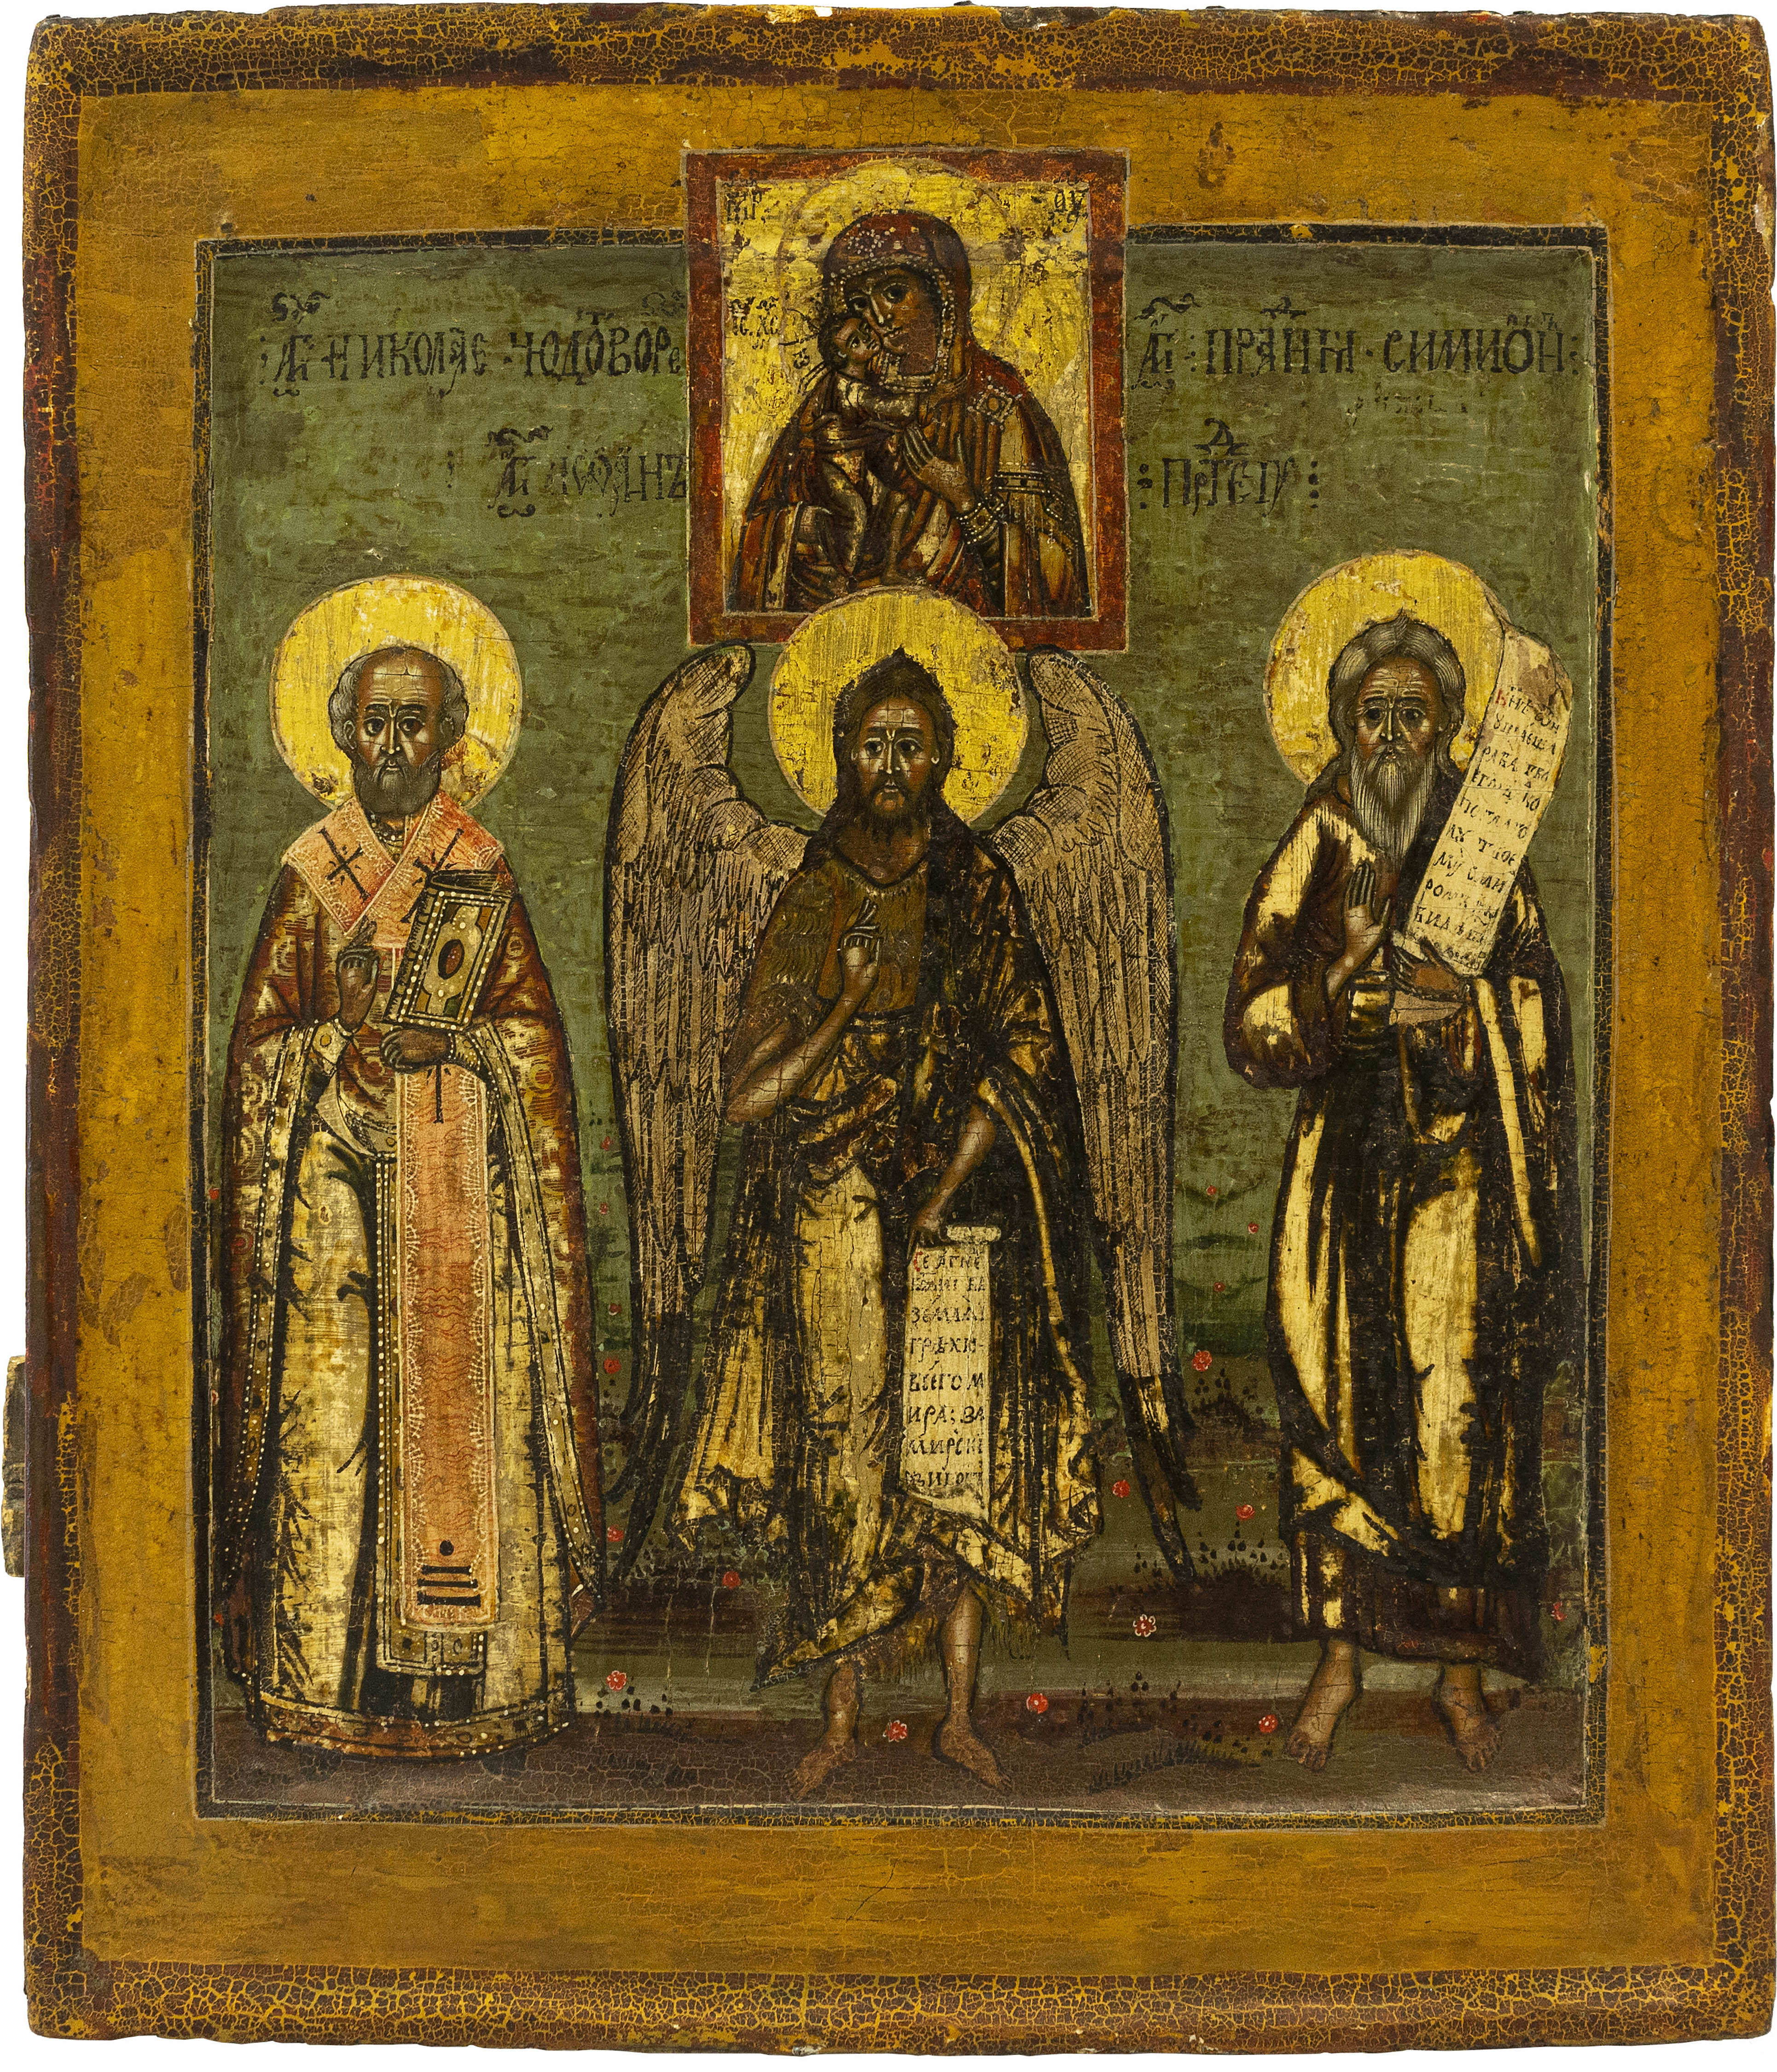 Ikone 'Heiliger Nikolaus, heiliger Johannes, heilige Propheten mit Gottesmutter Feodorovskaja' - Image 2 of 3